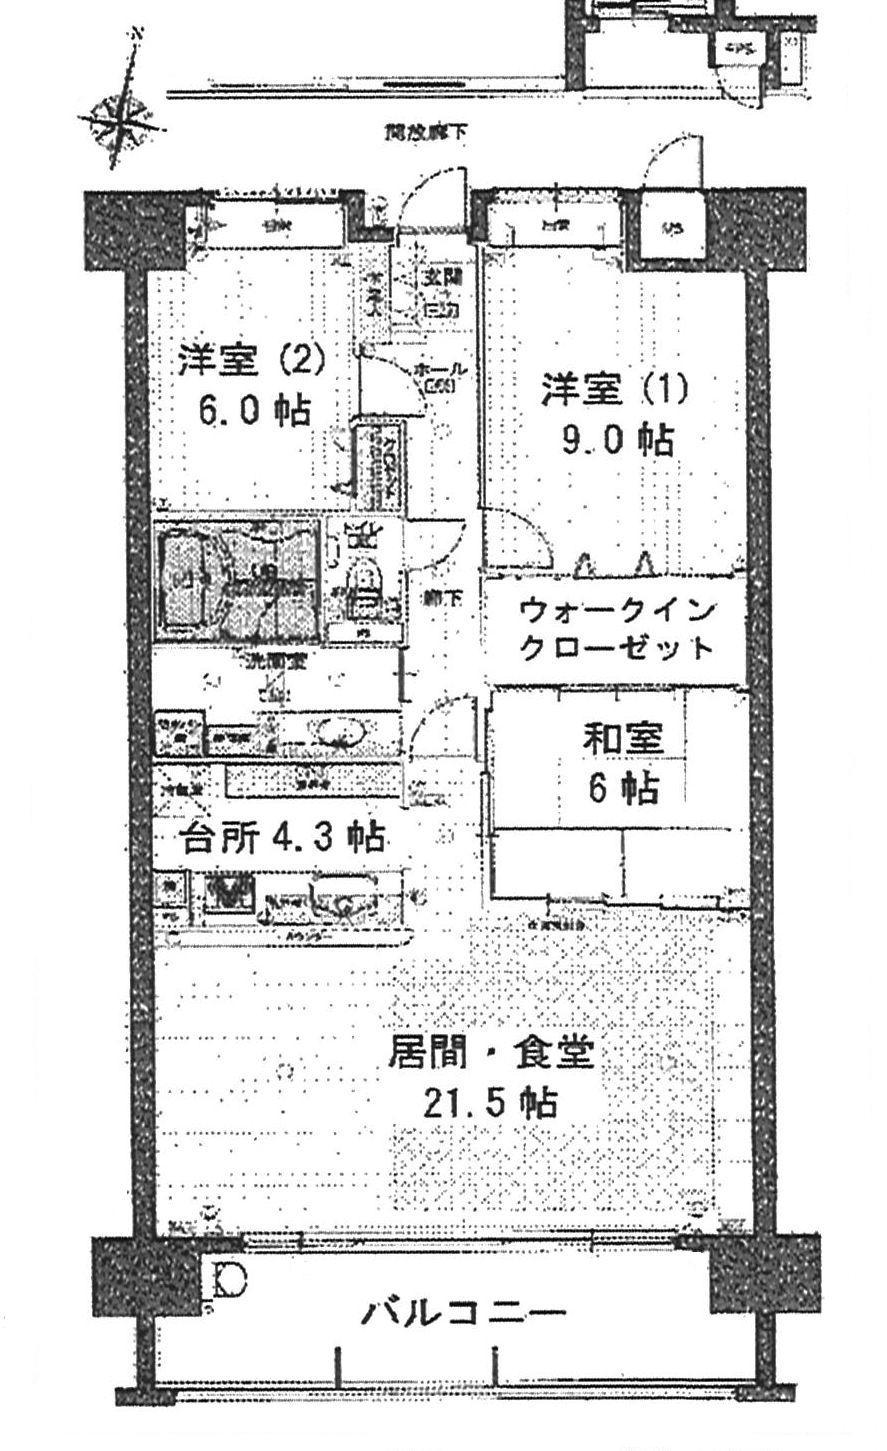 Floor plan. 3LDK, Price 32,800,000 yen, Footprint 100.63 sq m , Balcony area 15 sq m